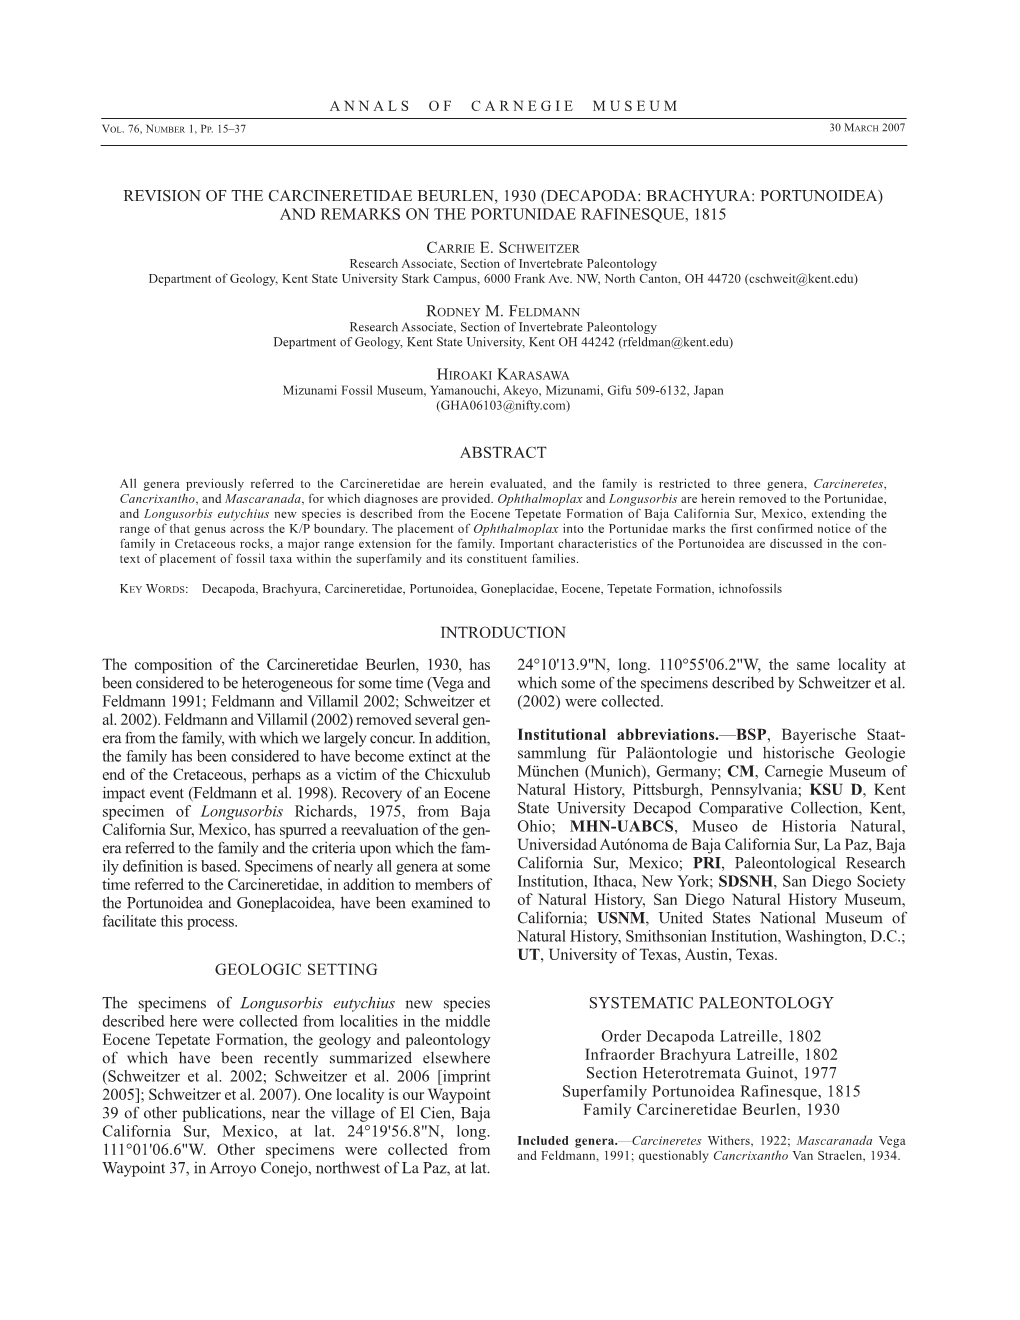 Revision of the Carcineretidae Beurlen, 1930 (Decapoda: Brachyura: Portunoidea) and Remarks on the Portunidae Rafinesque, 1815